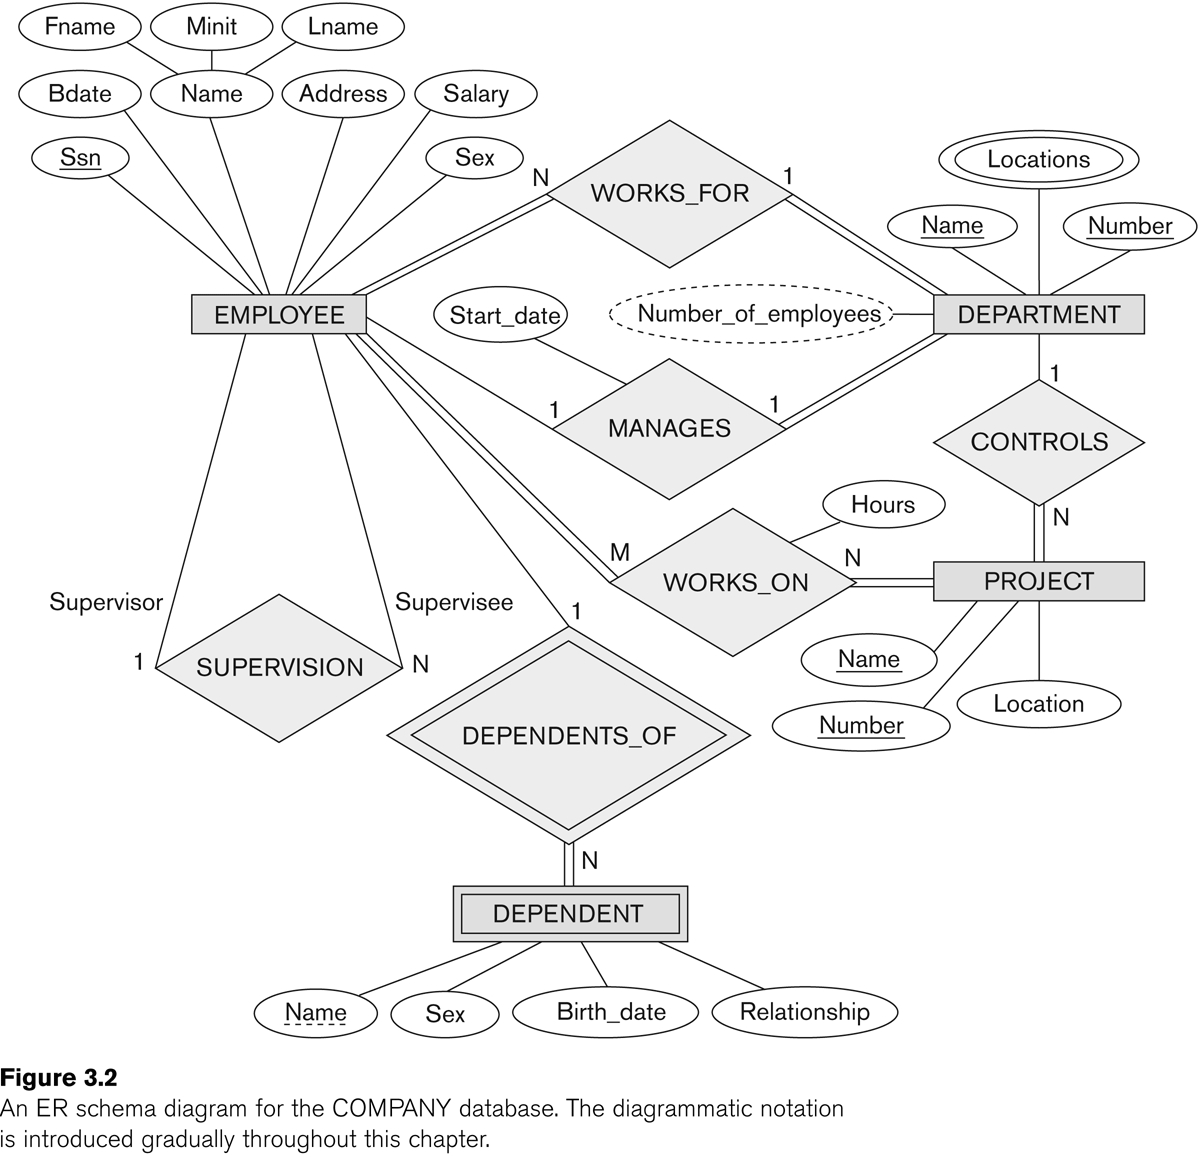 Entity-Relationship Modeling inside Business Entity Diagram